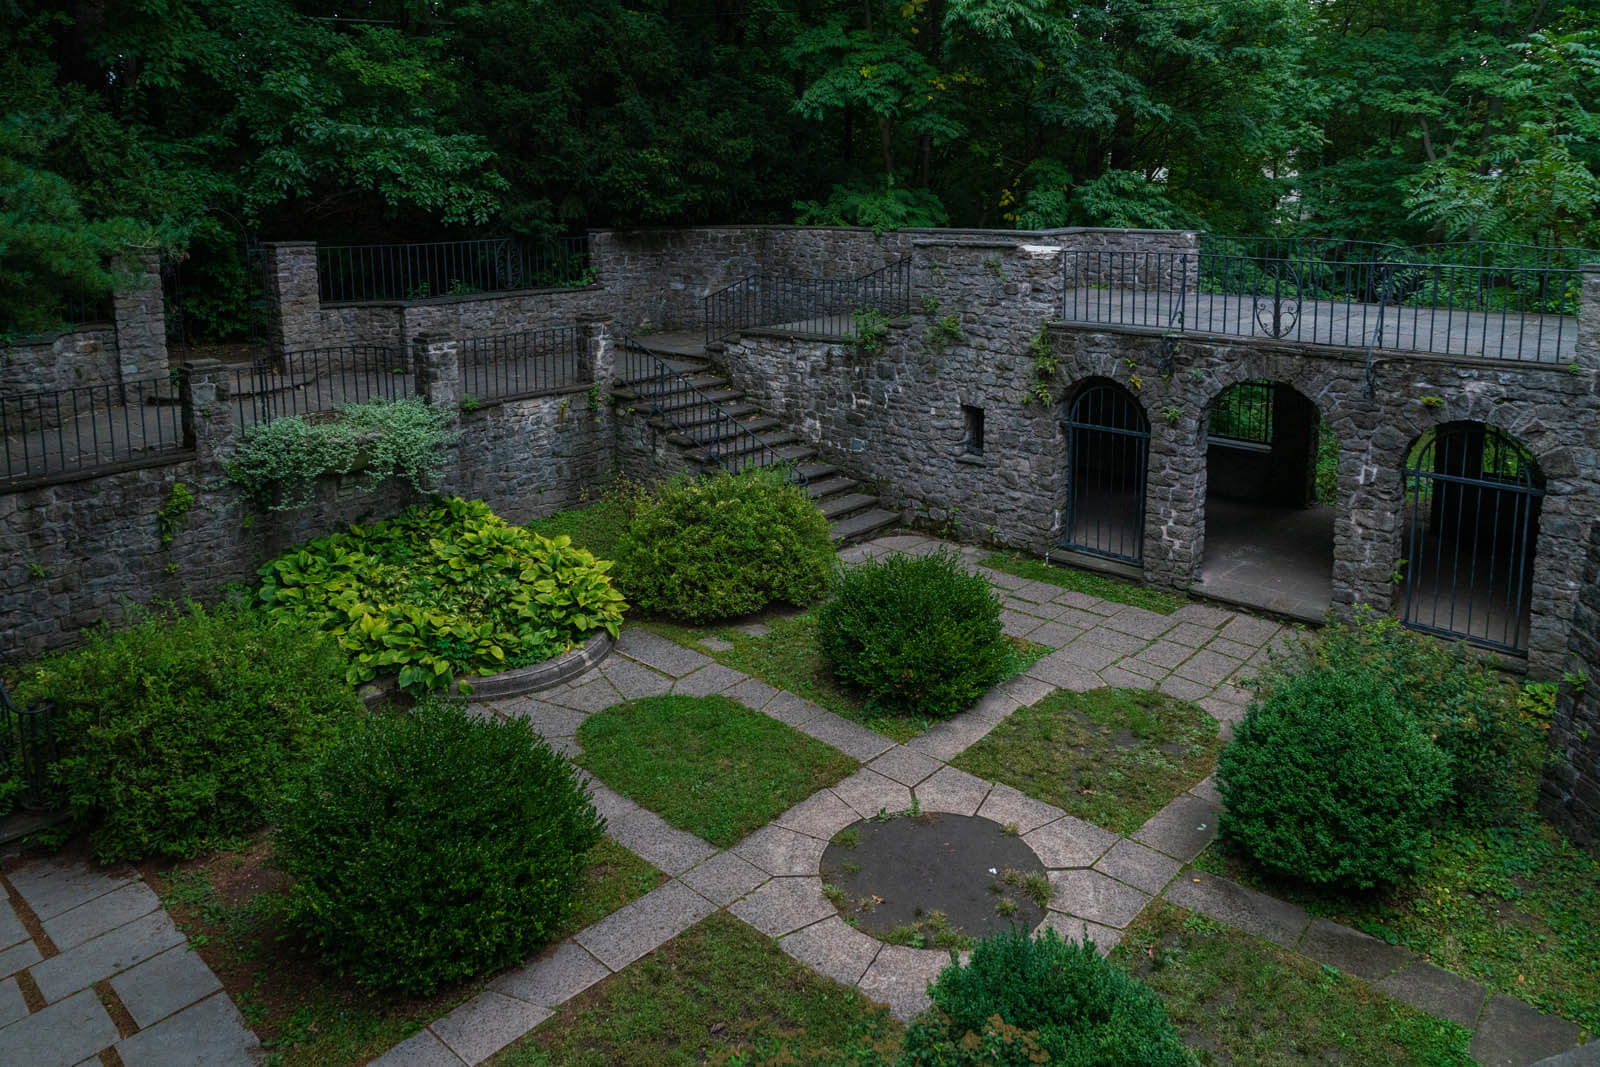 The Sunken Garden at Warner Castle in Highland Park Rochester New York